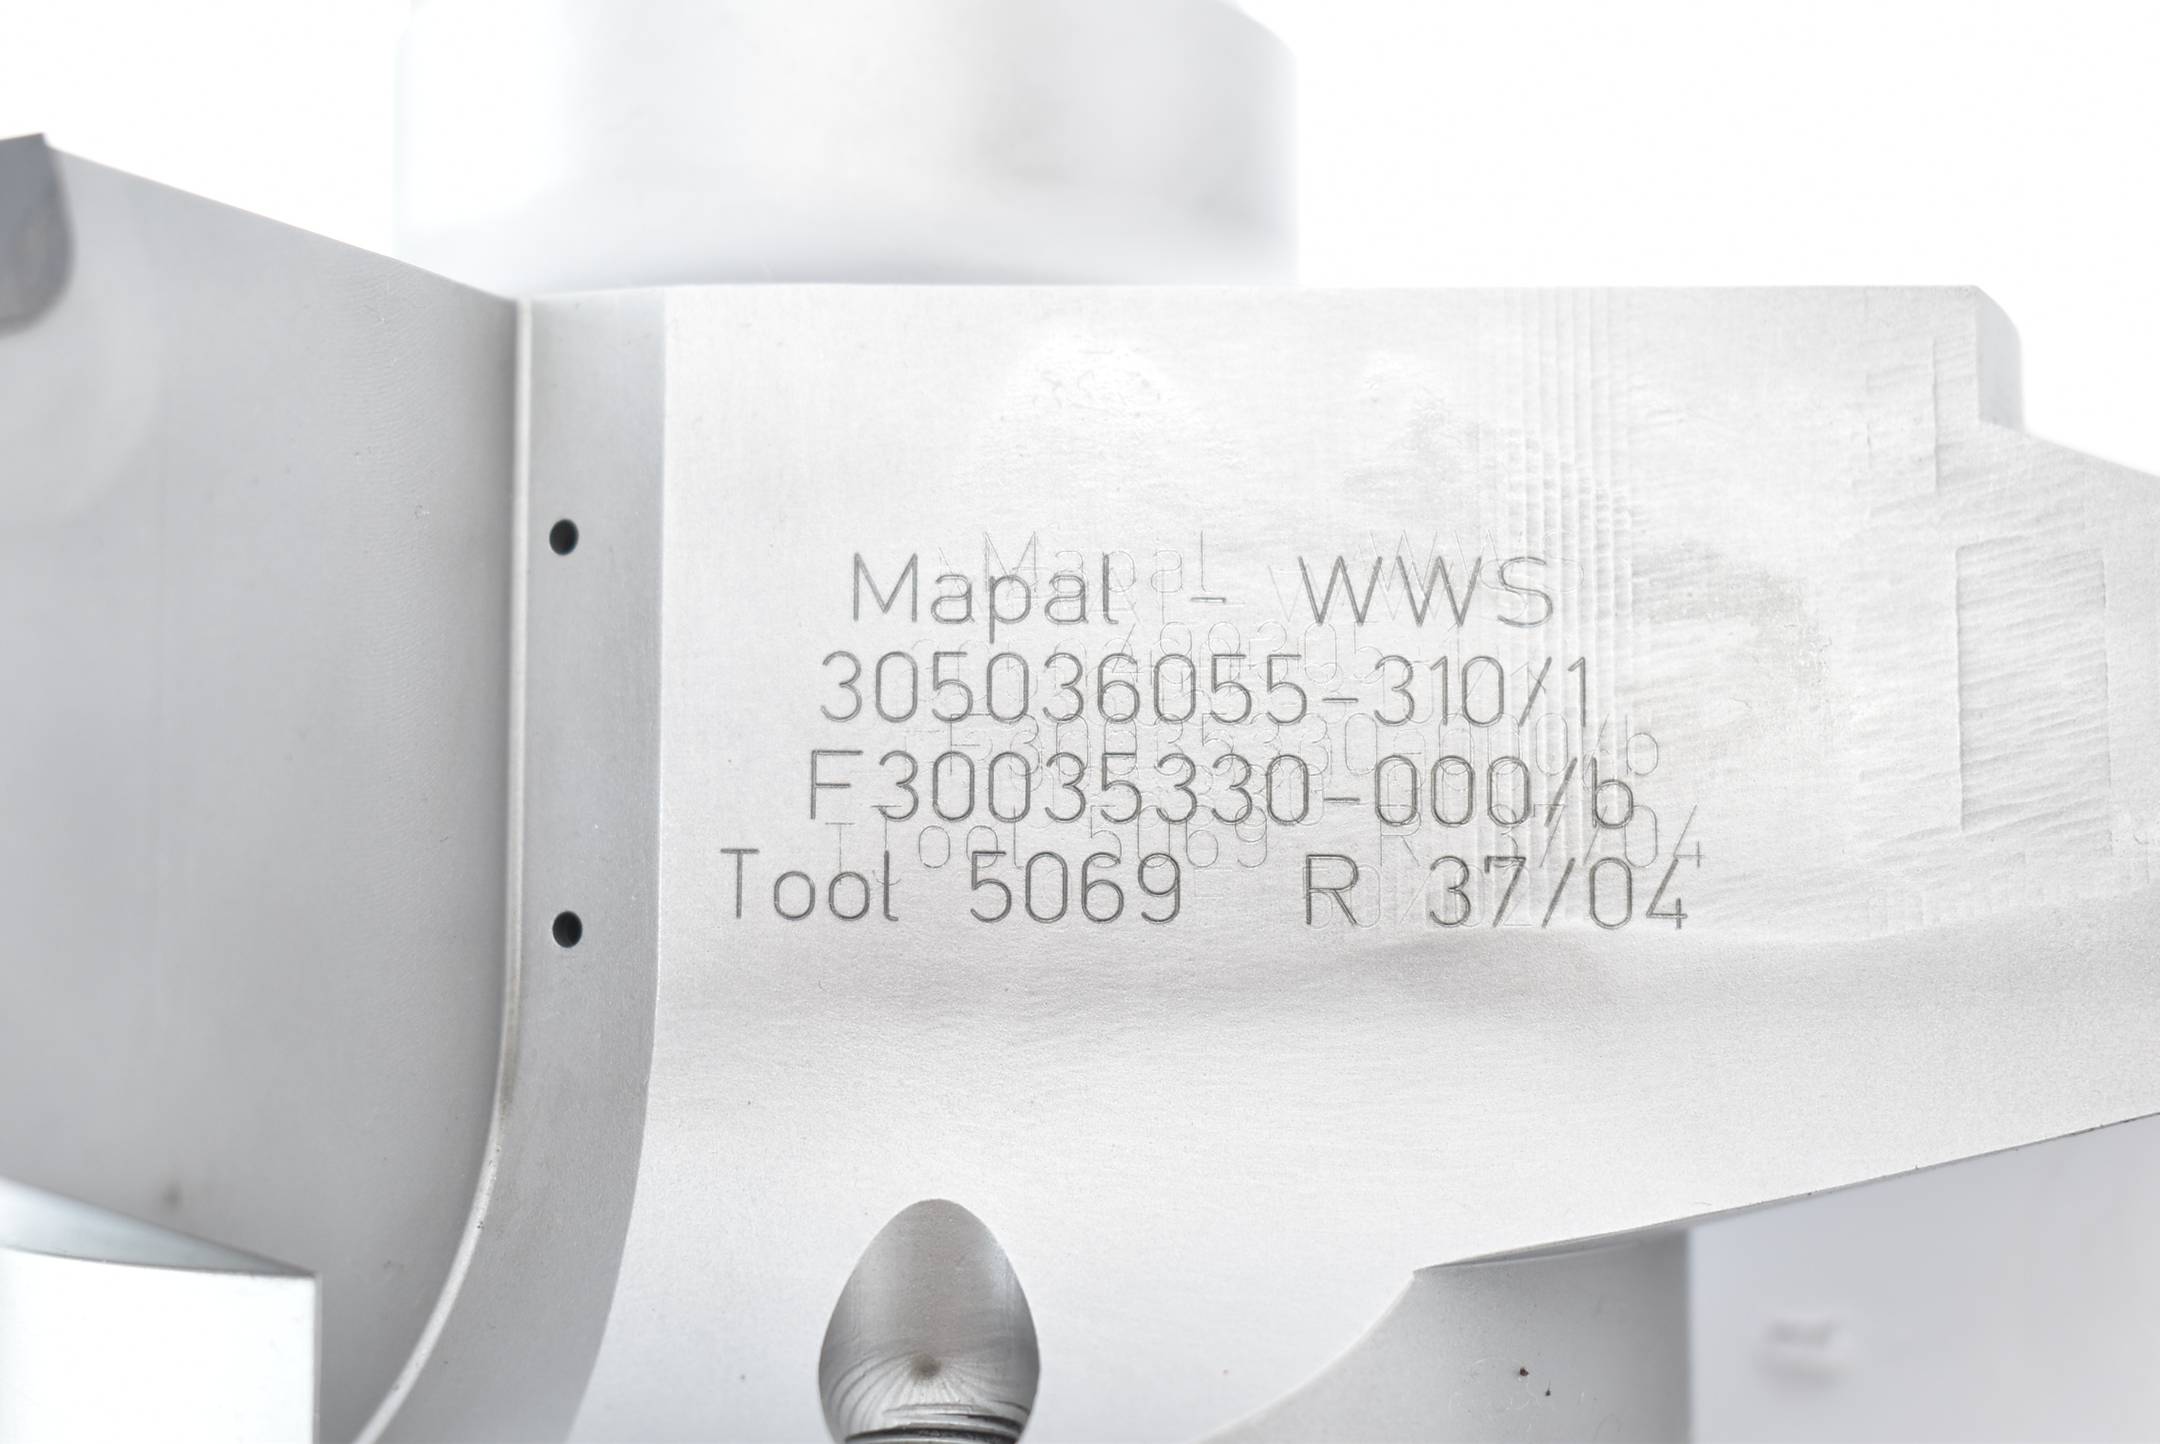 Mapal-WWS PKD-Stufenaufbohrwerkzeug 305036055-310/1 ( F30035330-000/b )Tool 5069